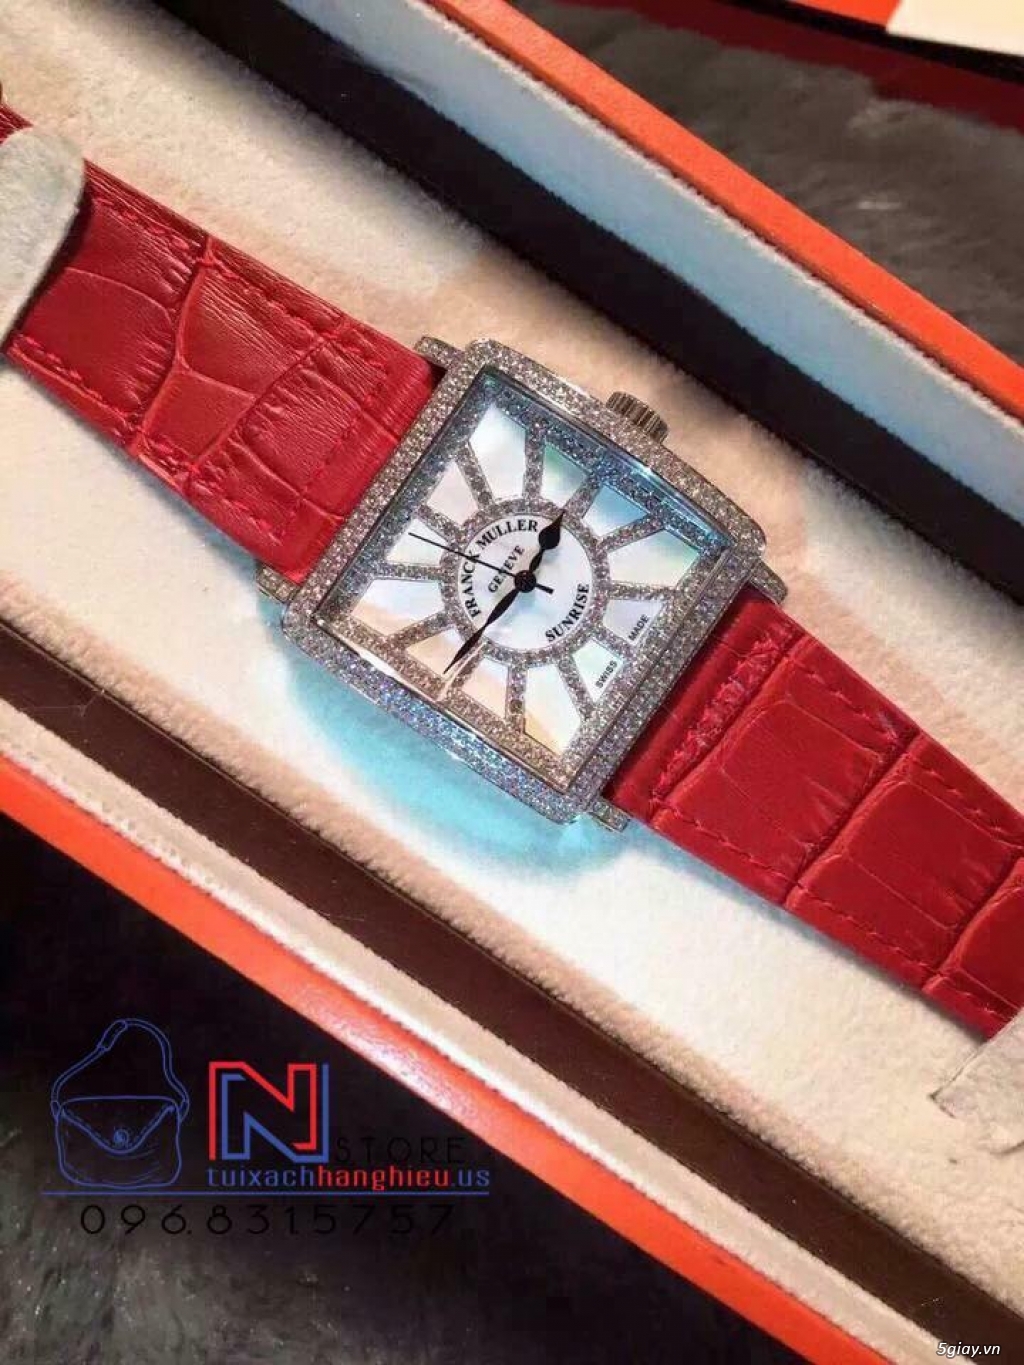 NNSTORE - Đồng hồ hàng hiệu Like Aut Piaget, Rolex, Cartier, chaaa, guuuu, Dior - 15